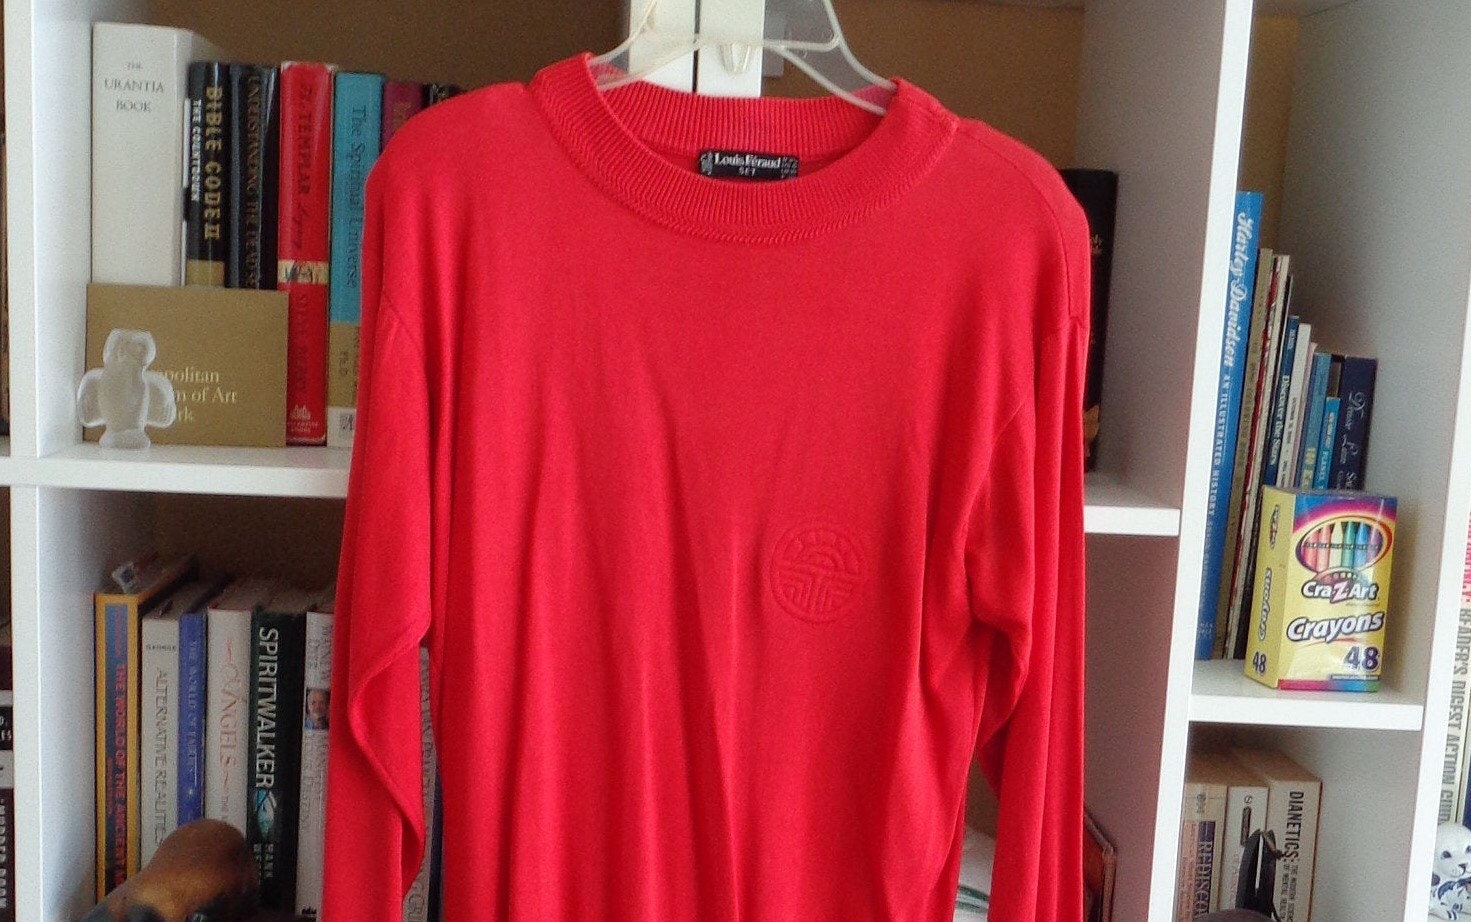 Louis Feraud T-Shirt for Men - Red price from souq in Saudi Arabia - Yaoota!